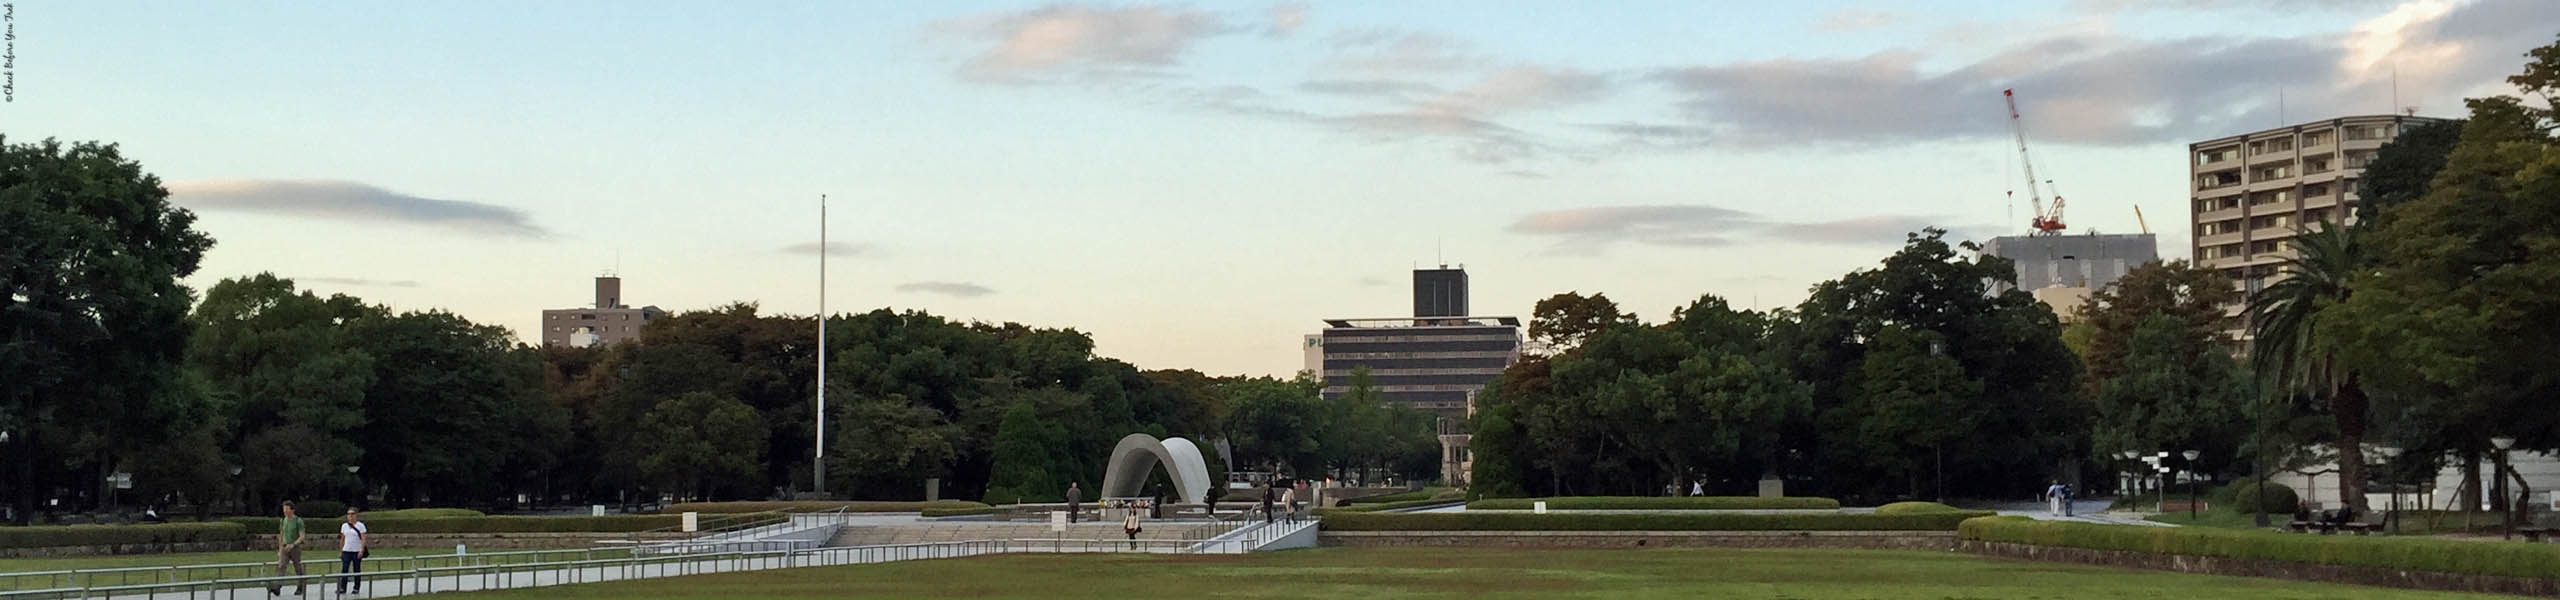 Hiroshima Peace Memorial Park Featured Photo - Hiroshima, Japan